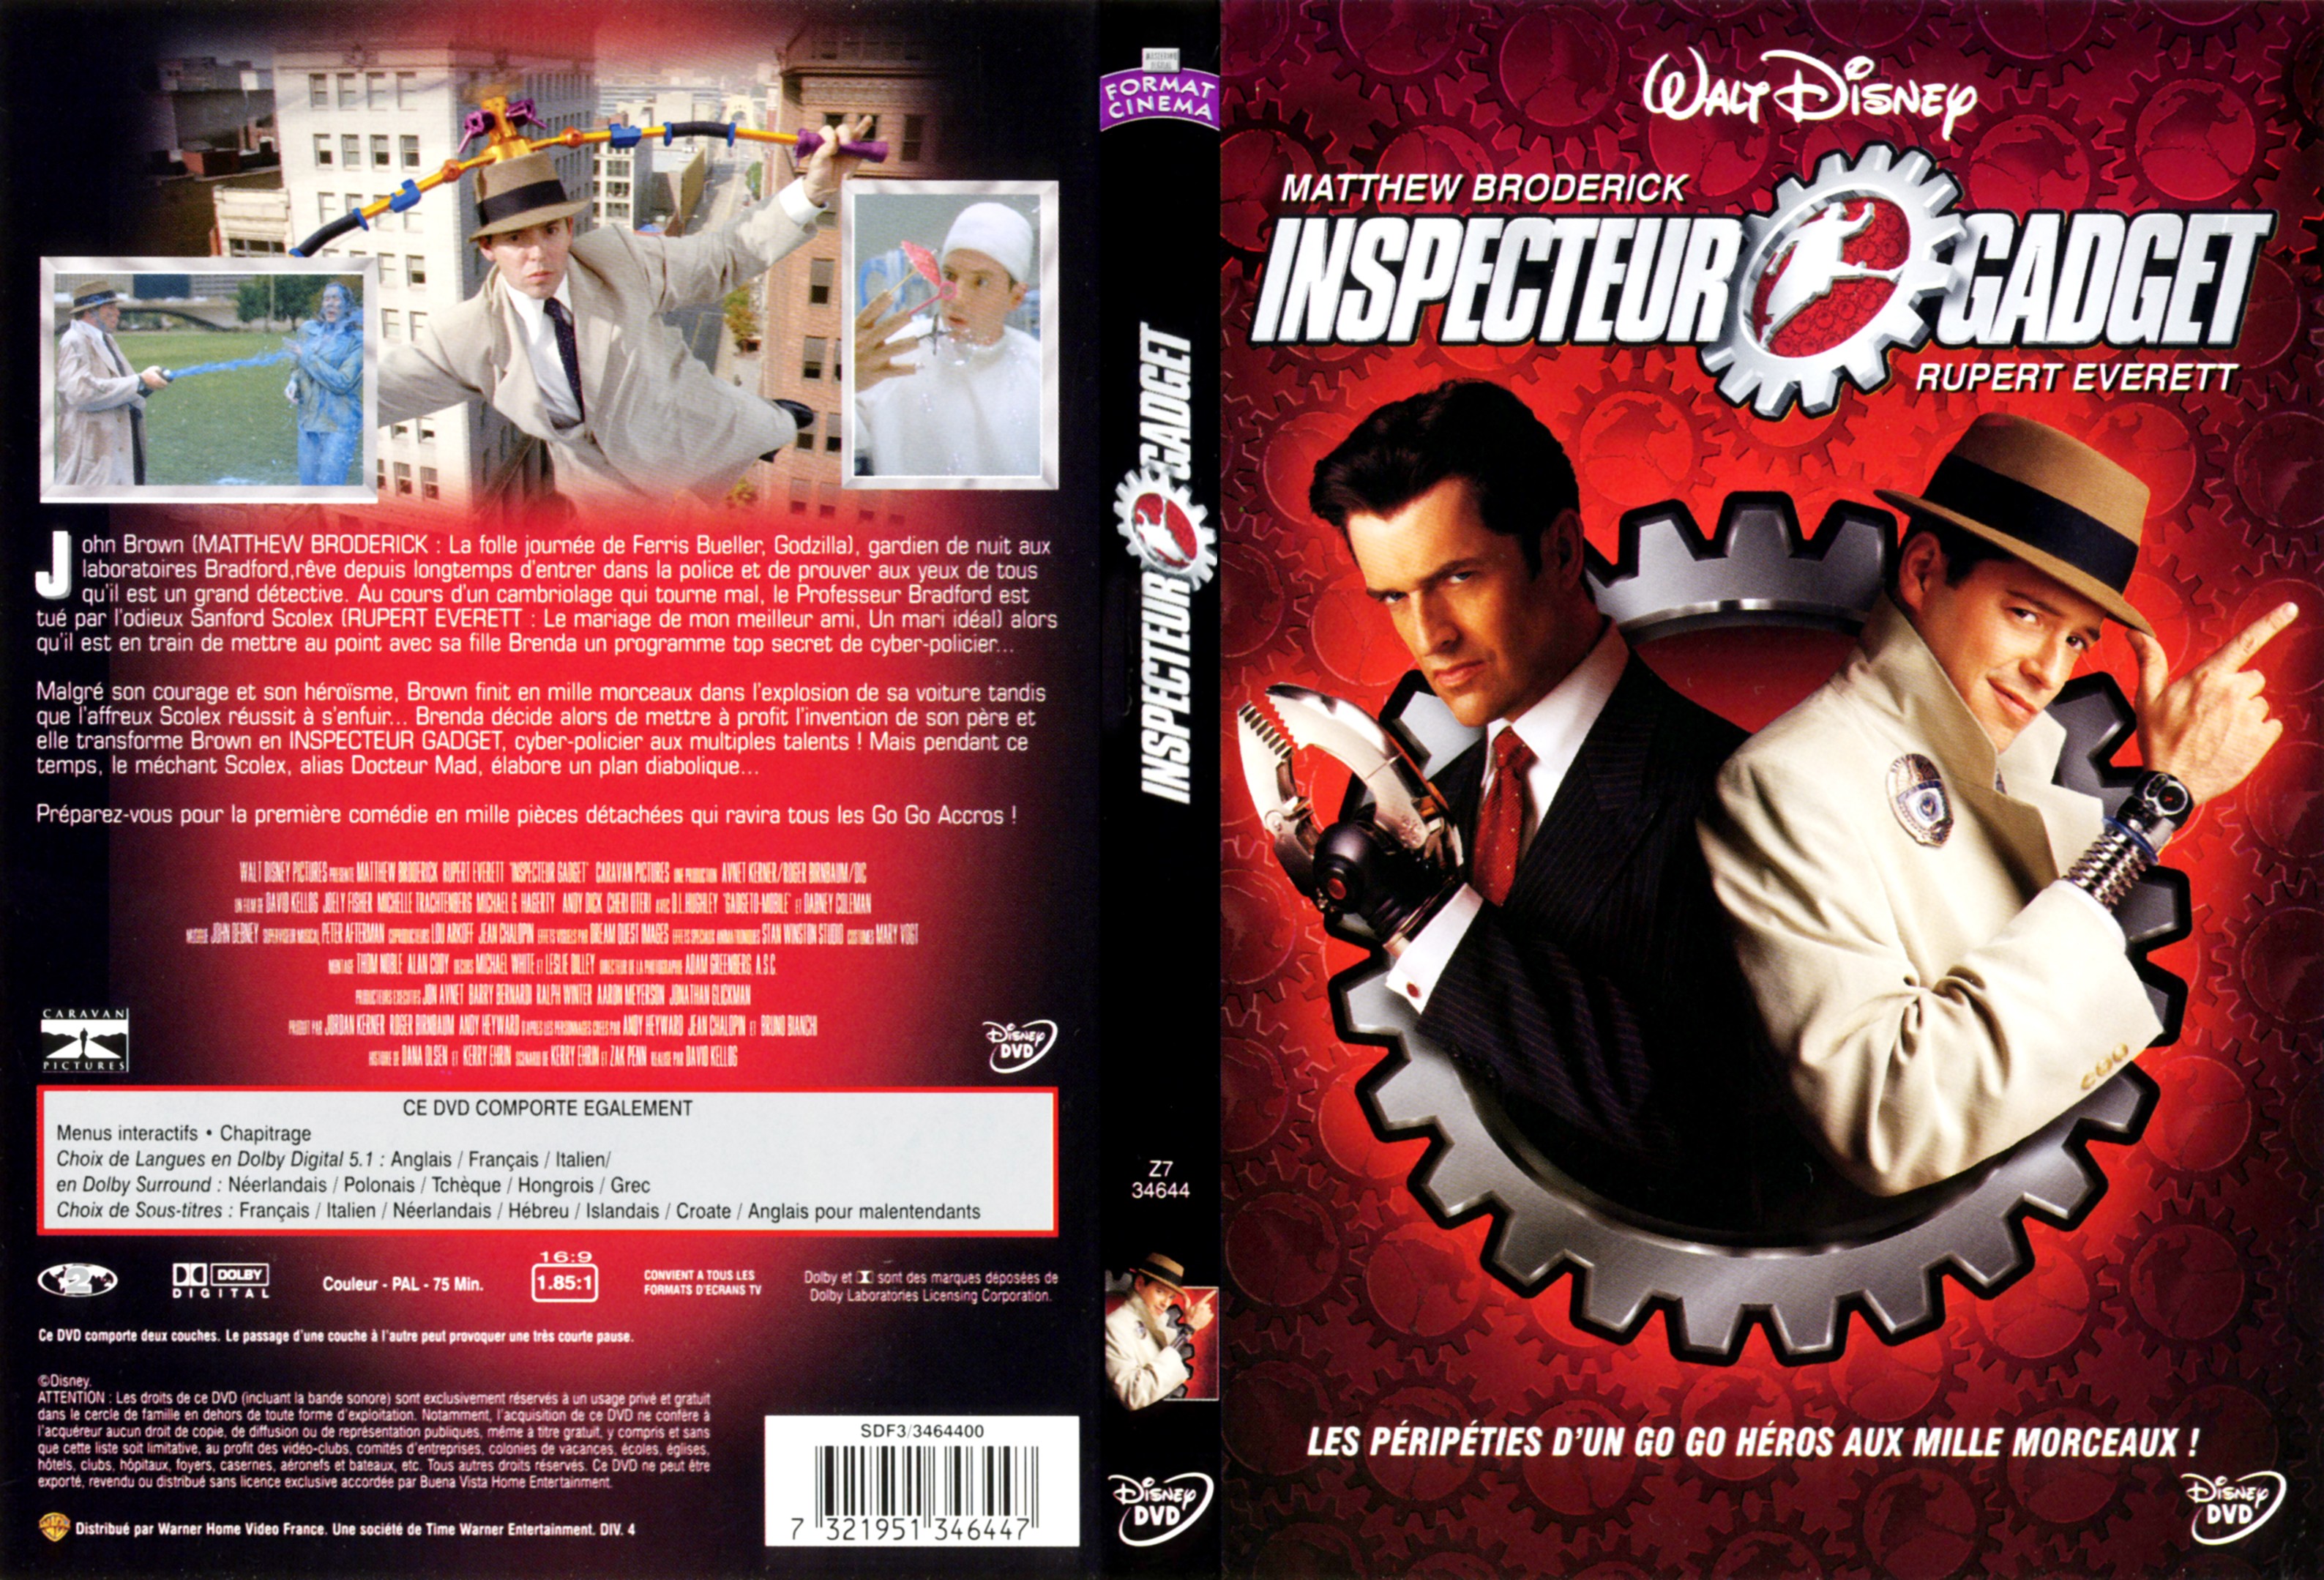 Jaquette DVD Inspecteur Gadget v2